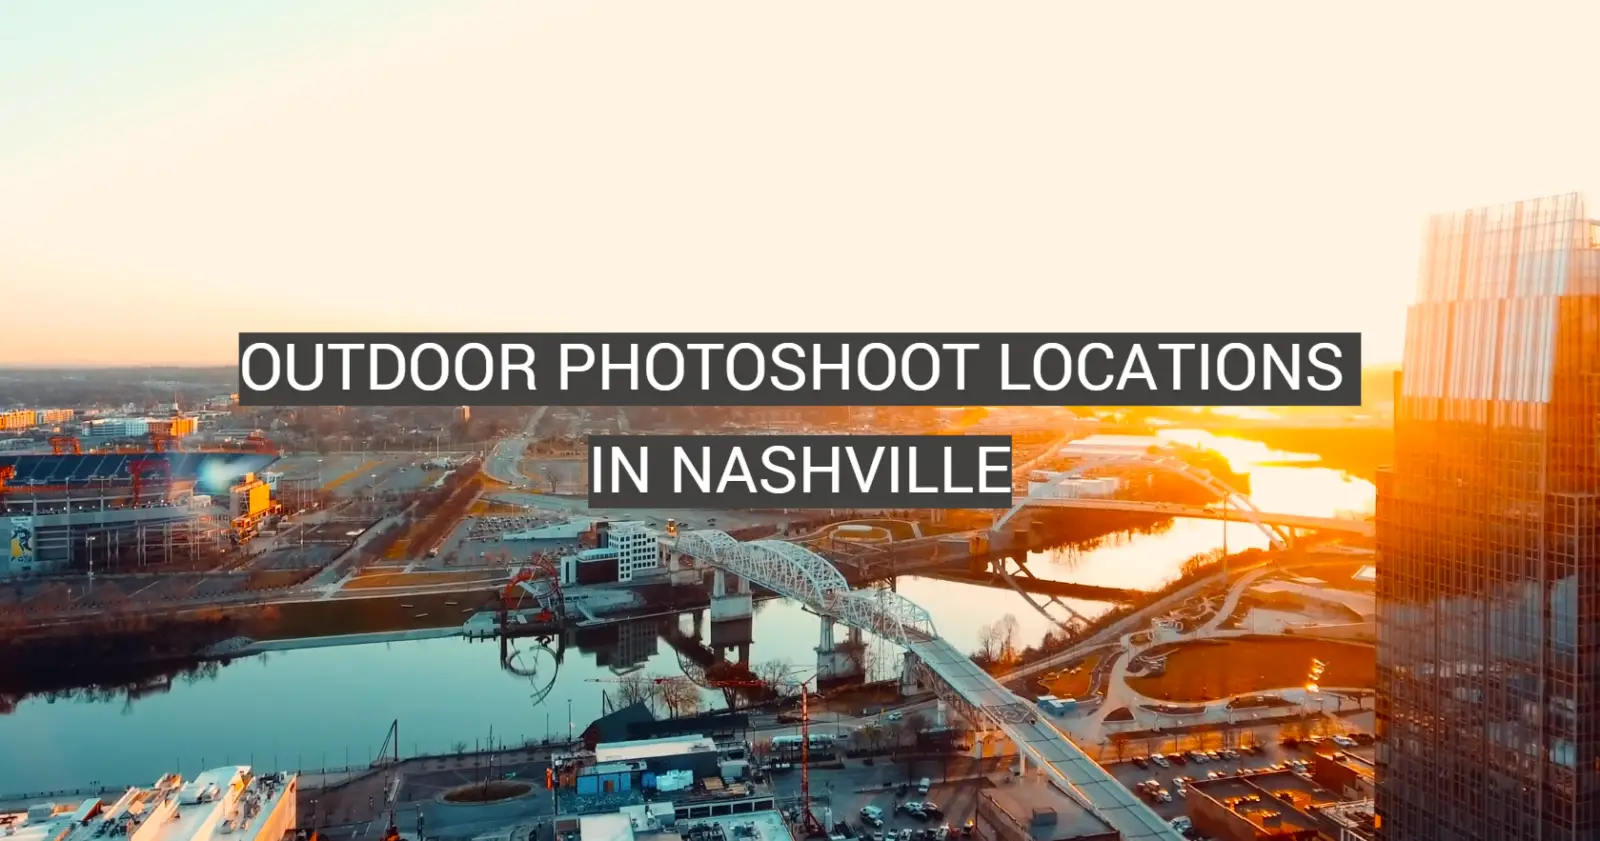 Outdoor Photoshoot Locations in Nashville